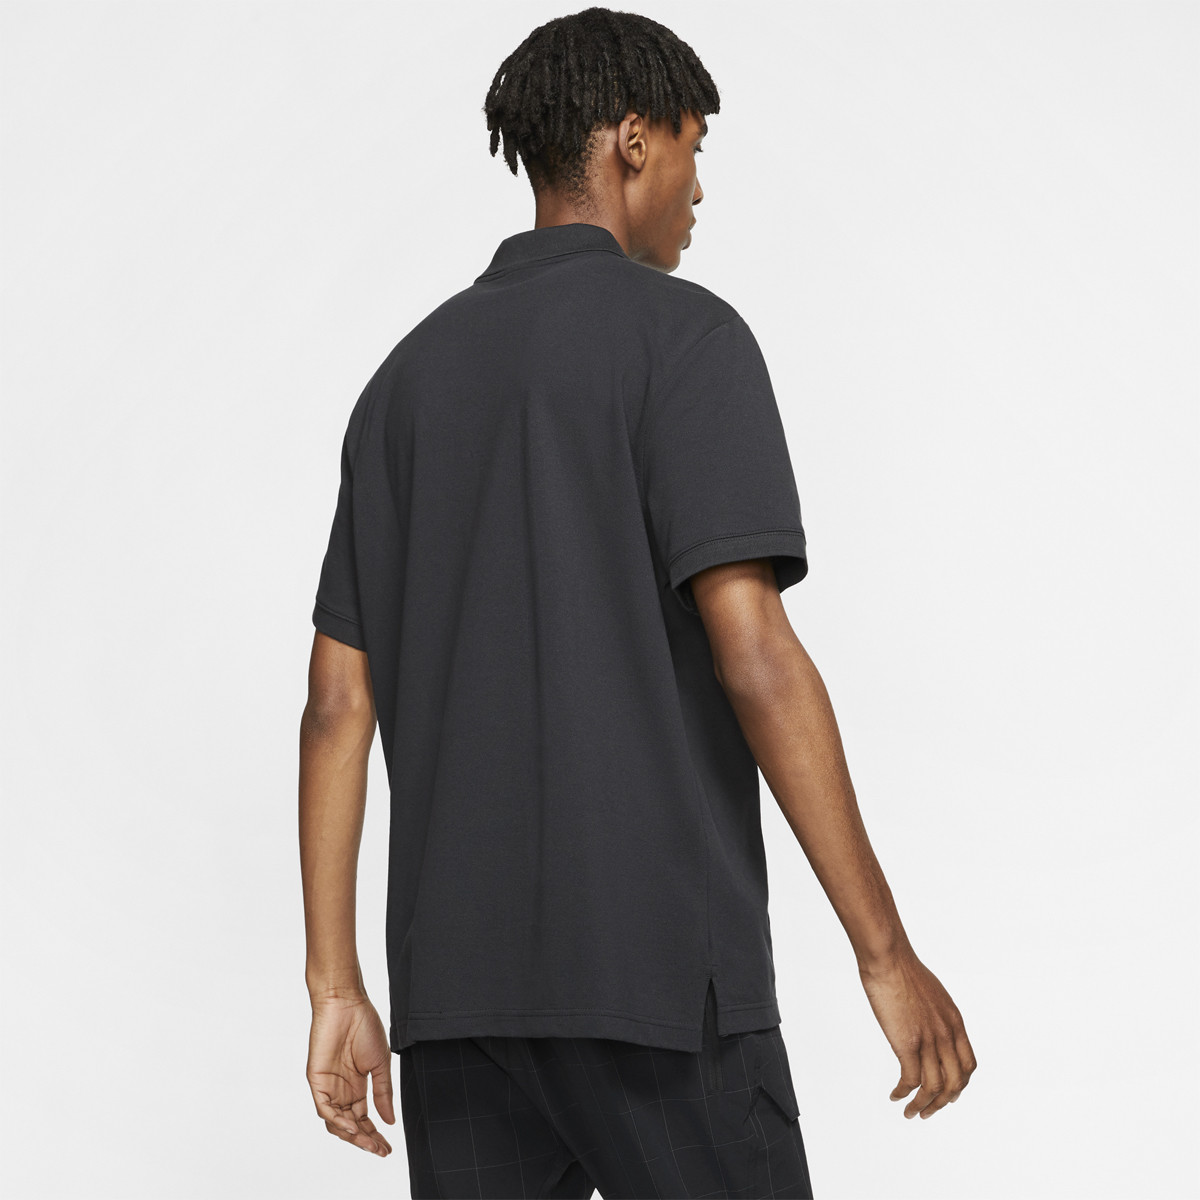 Nike Sportswear CLUB MATCHUP - Polo - black/noir 